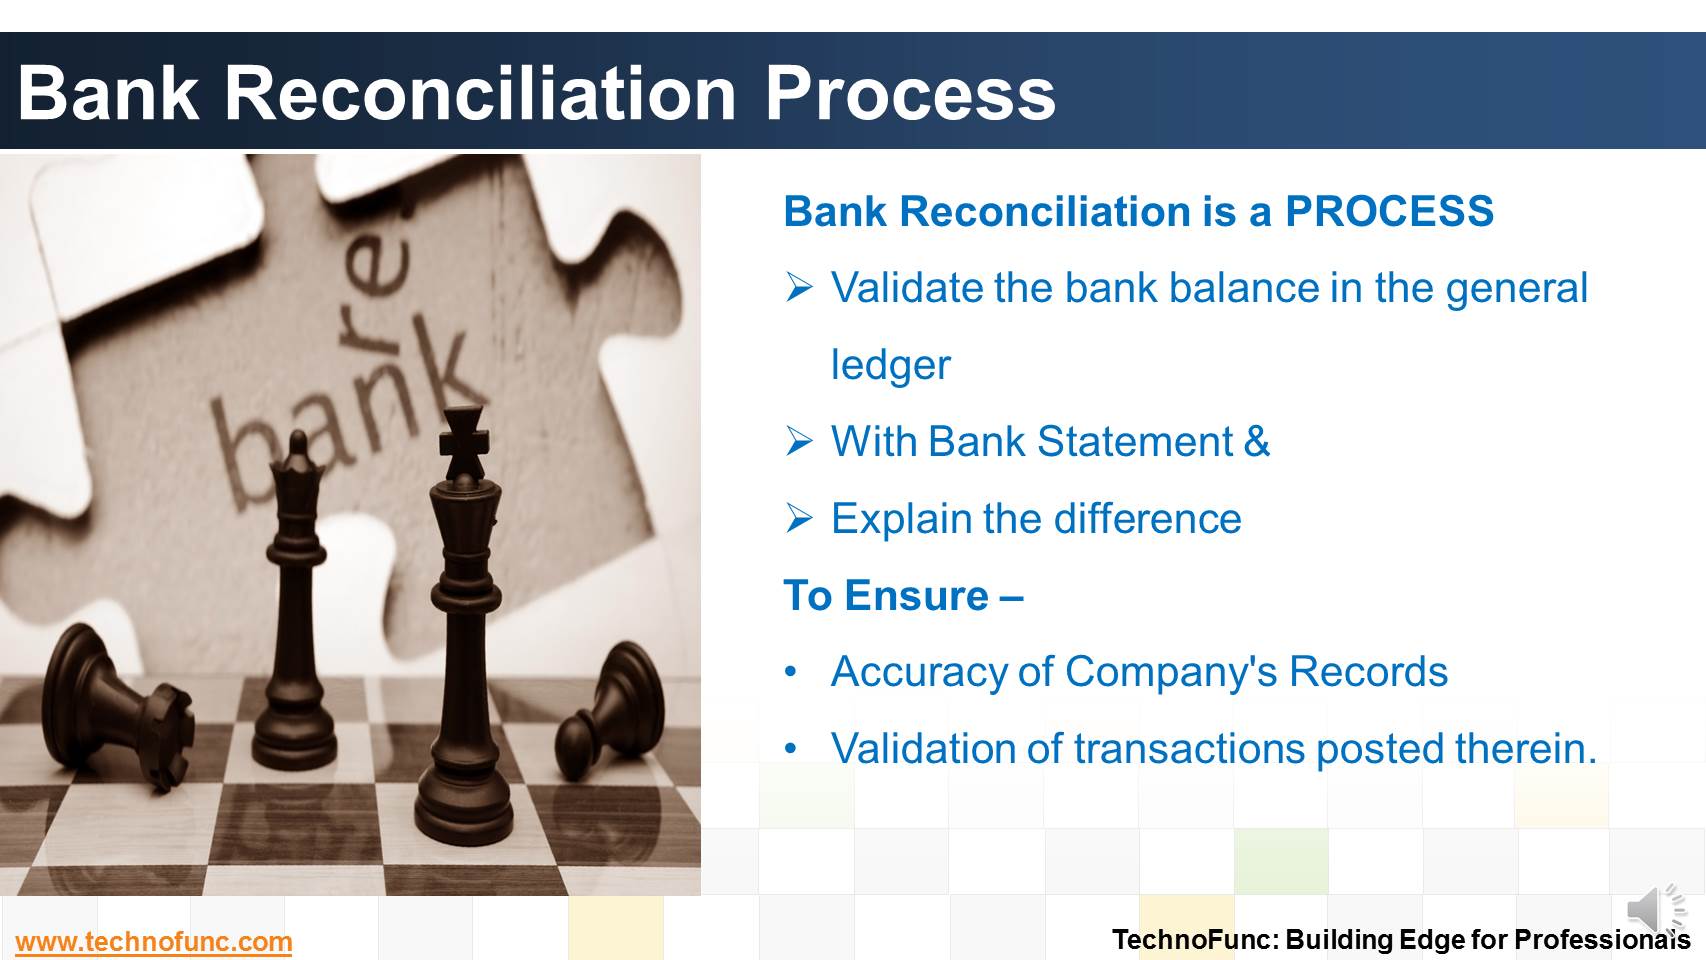 Bank Reconciliation Process